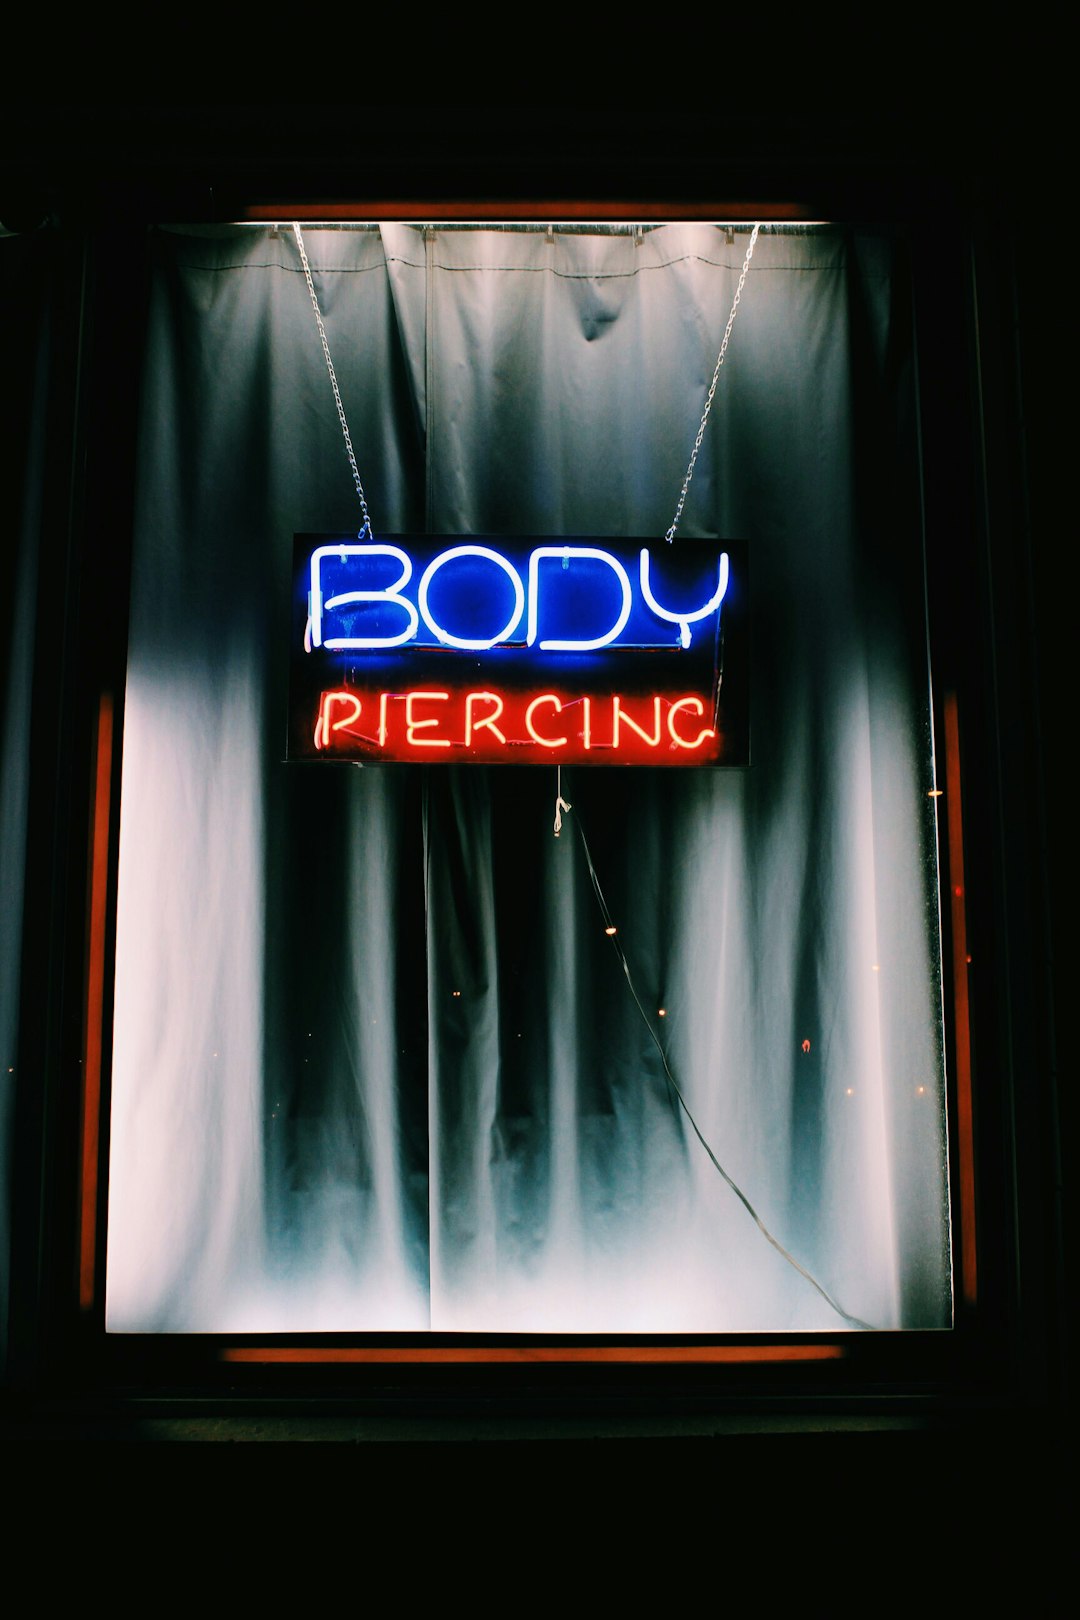 Body Piercing signage